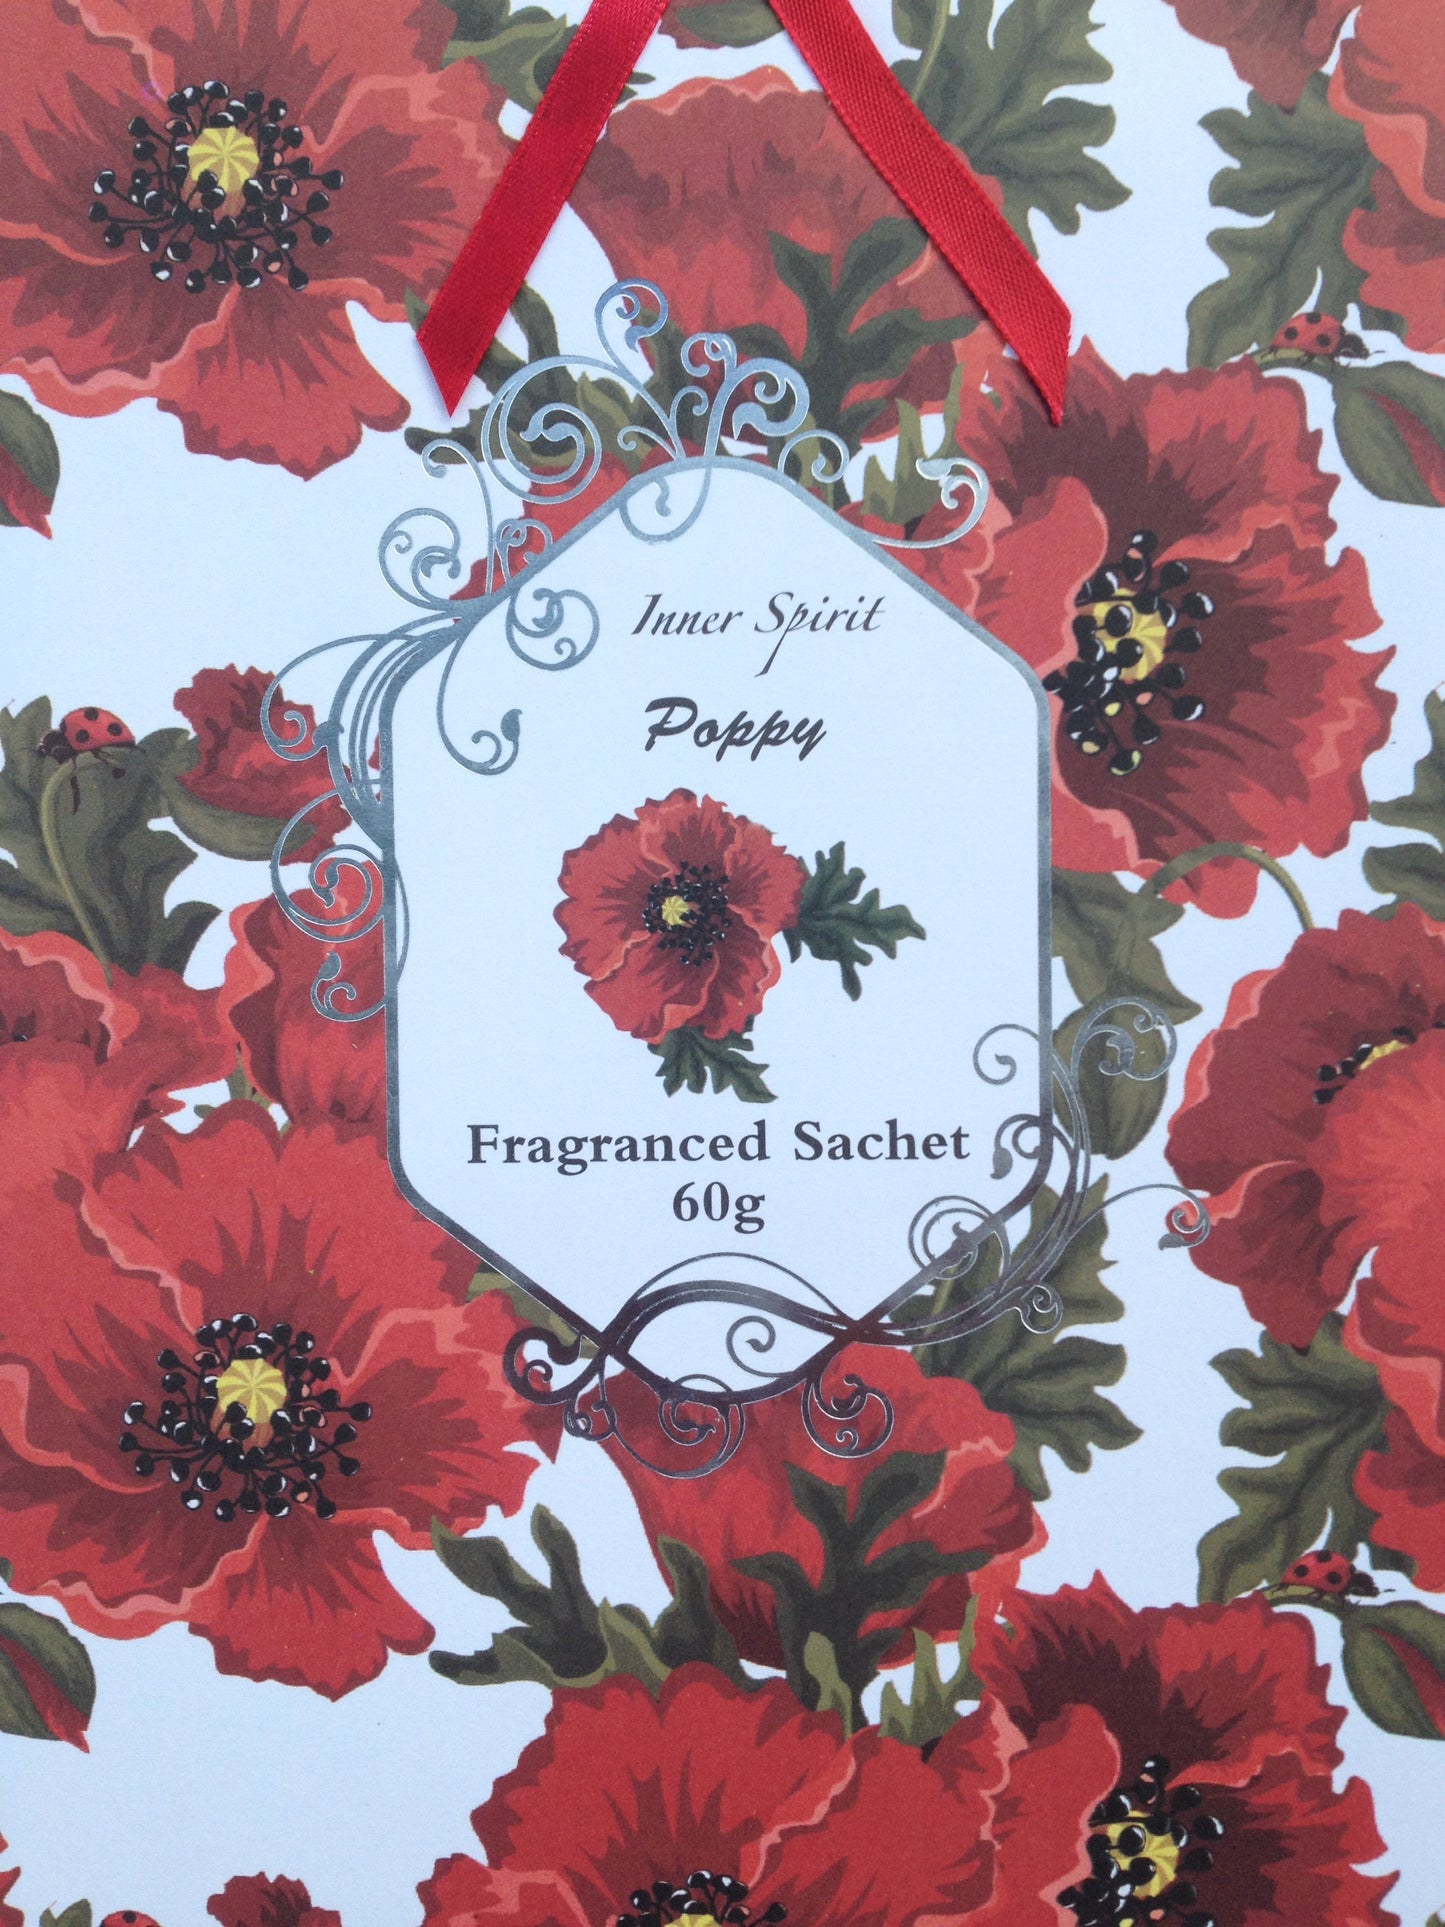 Poppy Fragranced Sachet